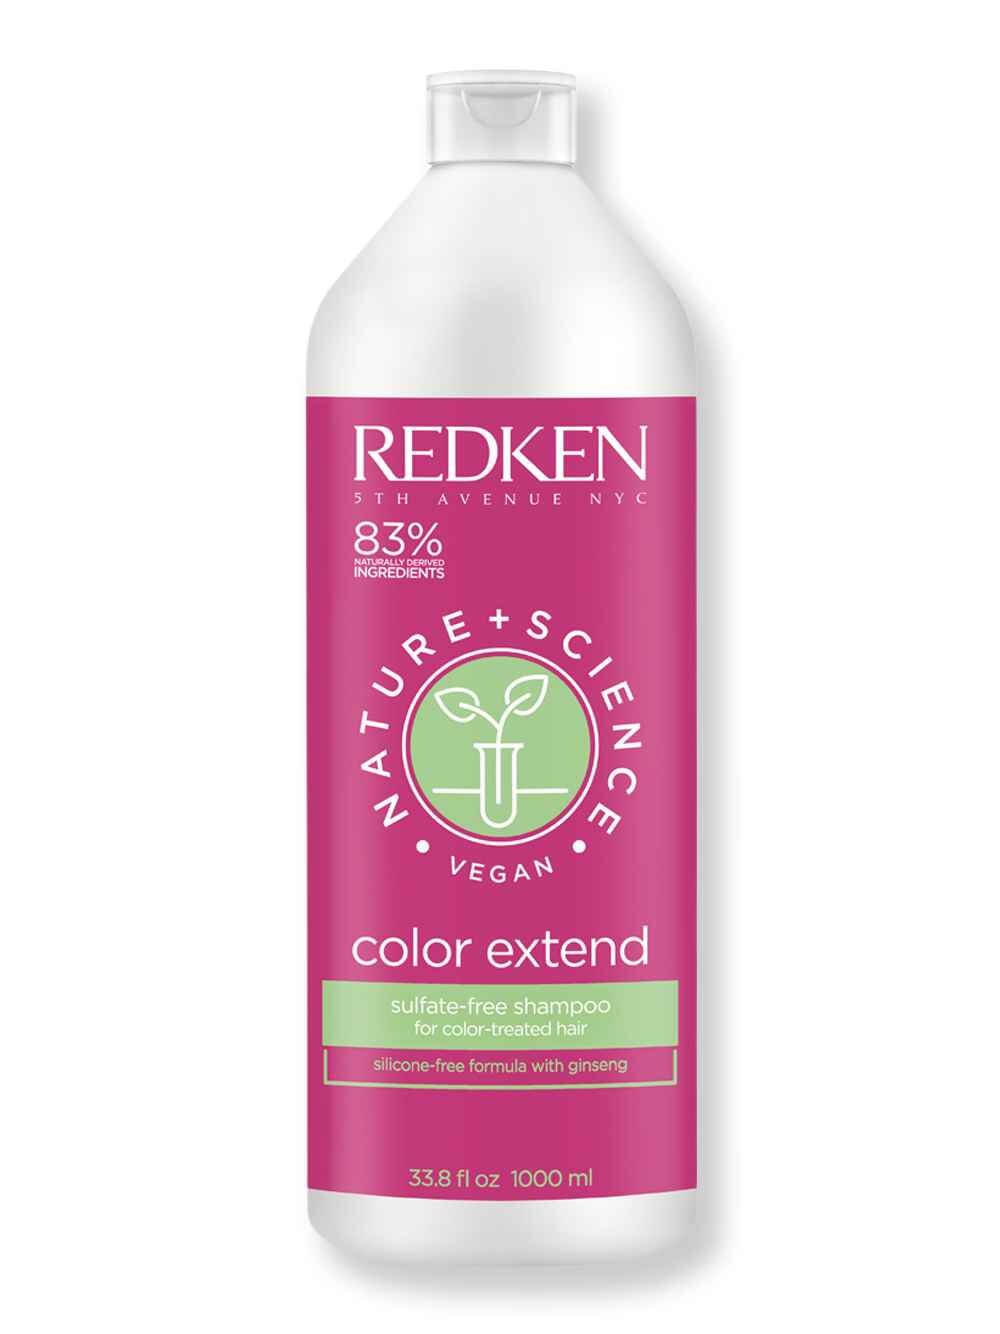 Redken Redken Nature + Science Color Extend Shampoo Liter Shampoos 